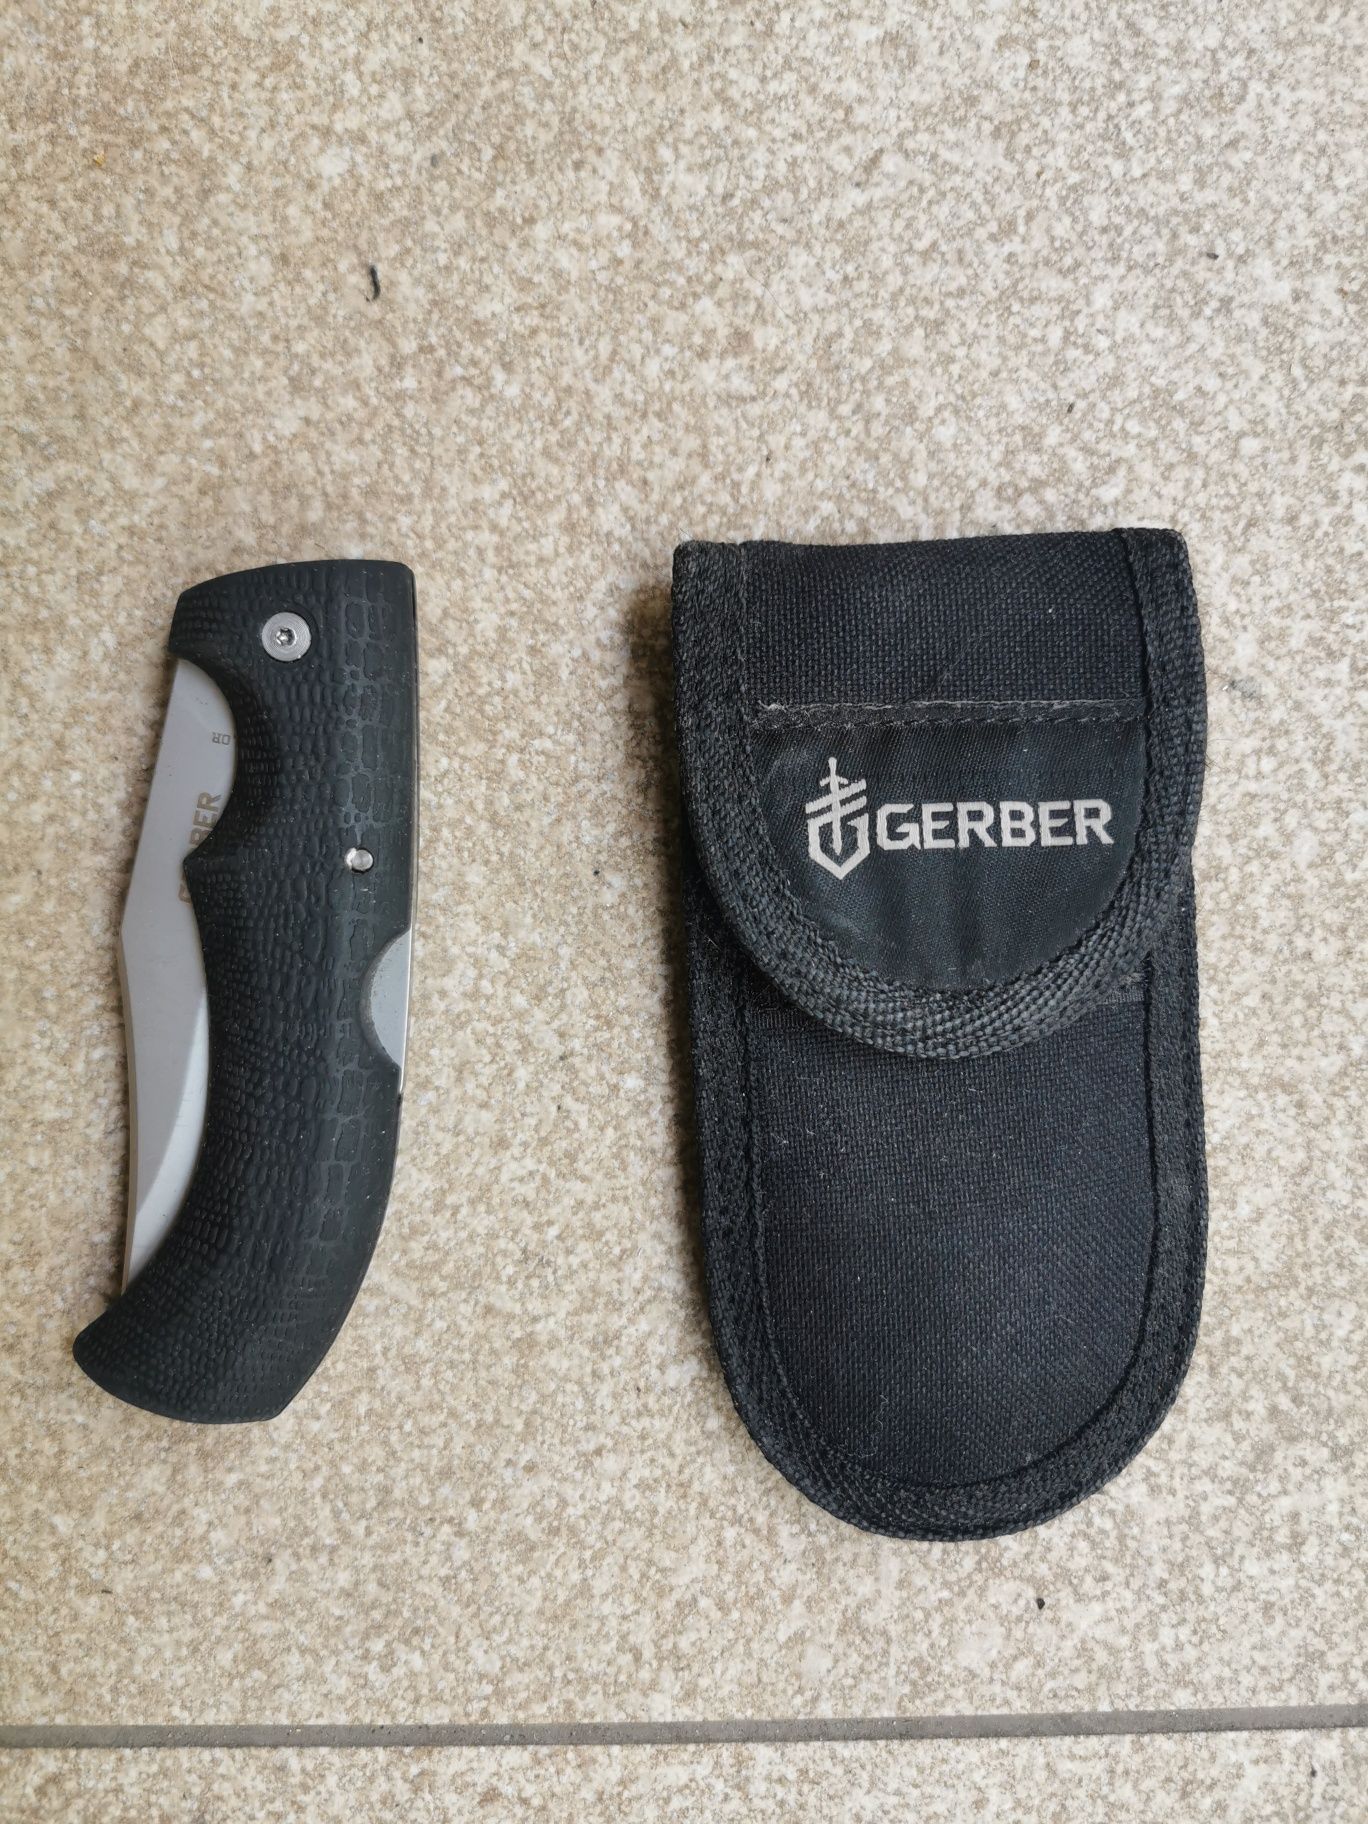 Nóż Gerber Gator Folder Clip Point
ModelGATOR FOLDER CLIP POINT